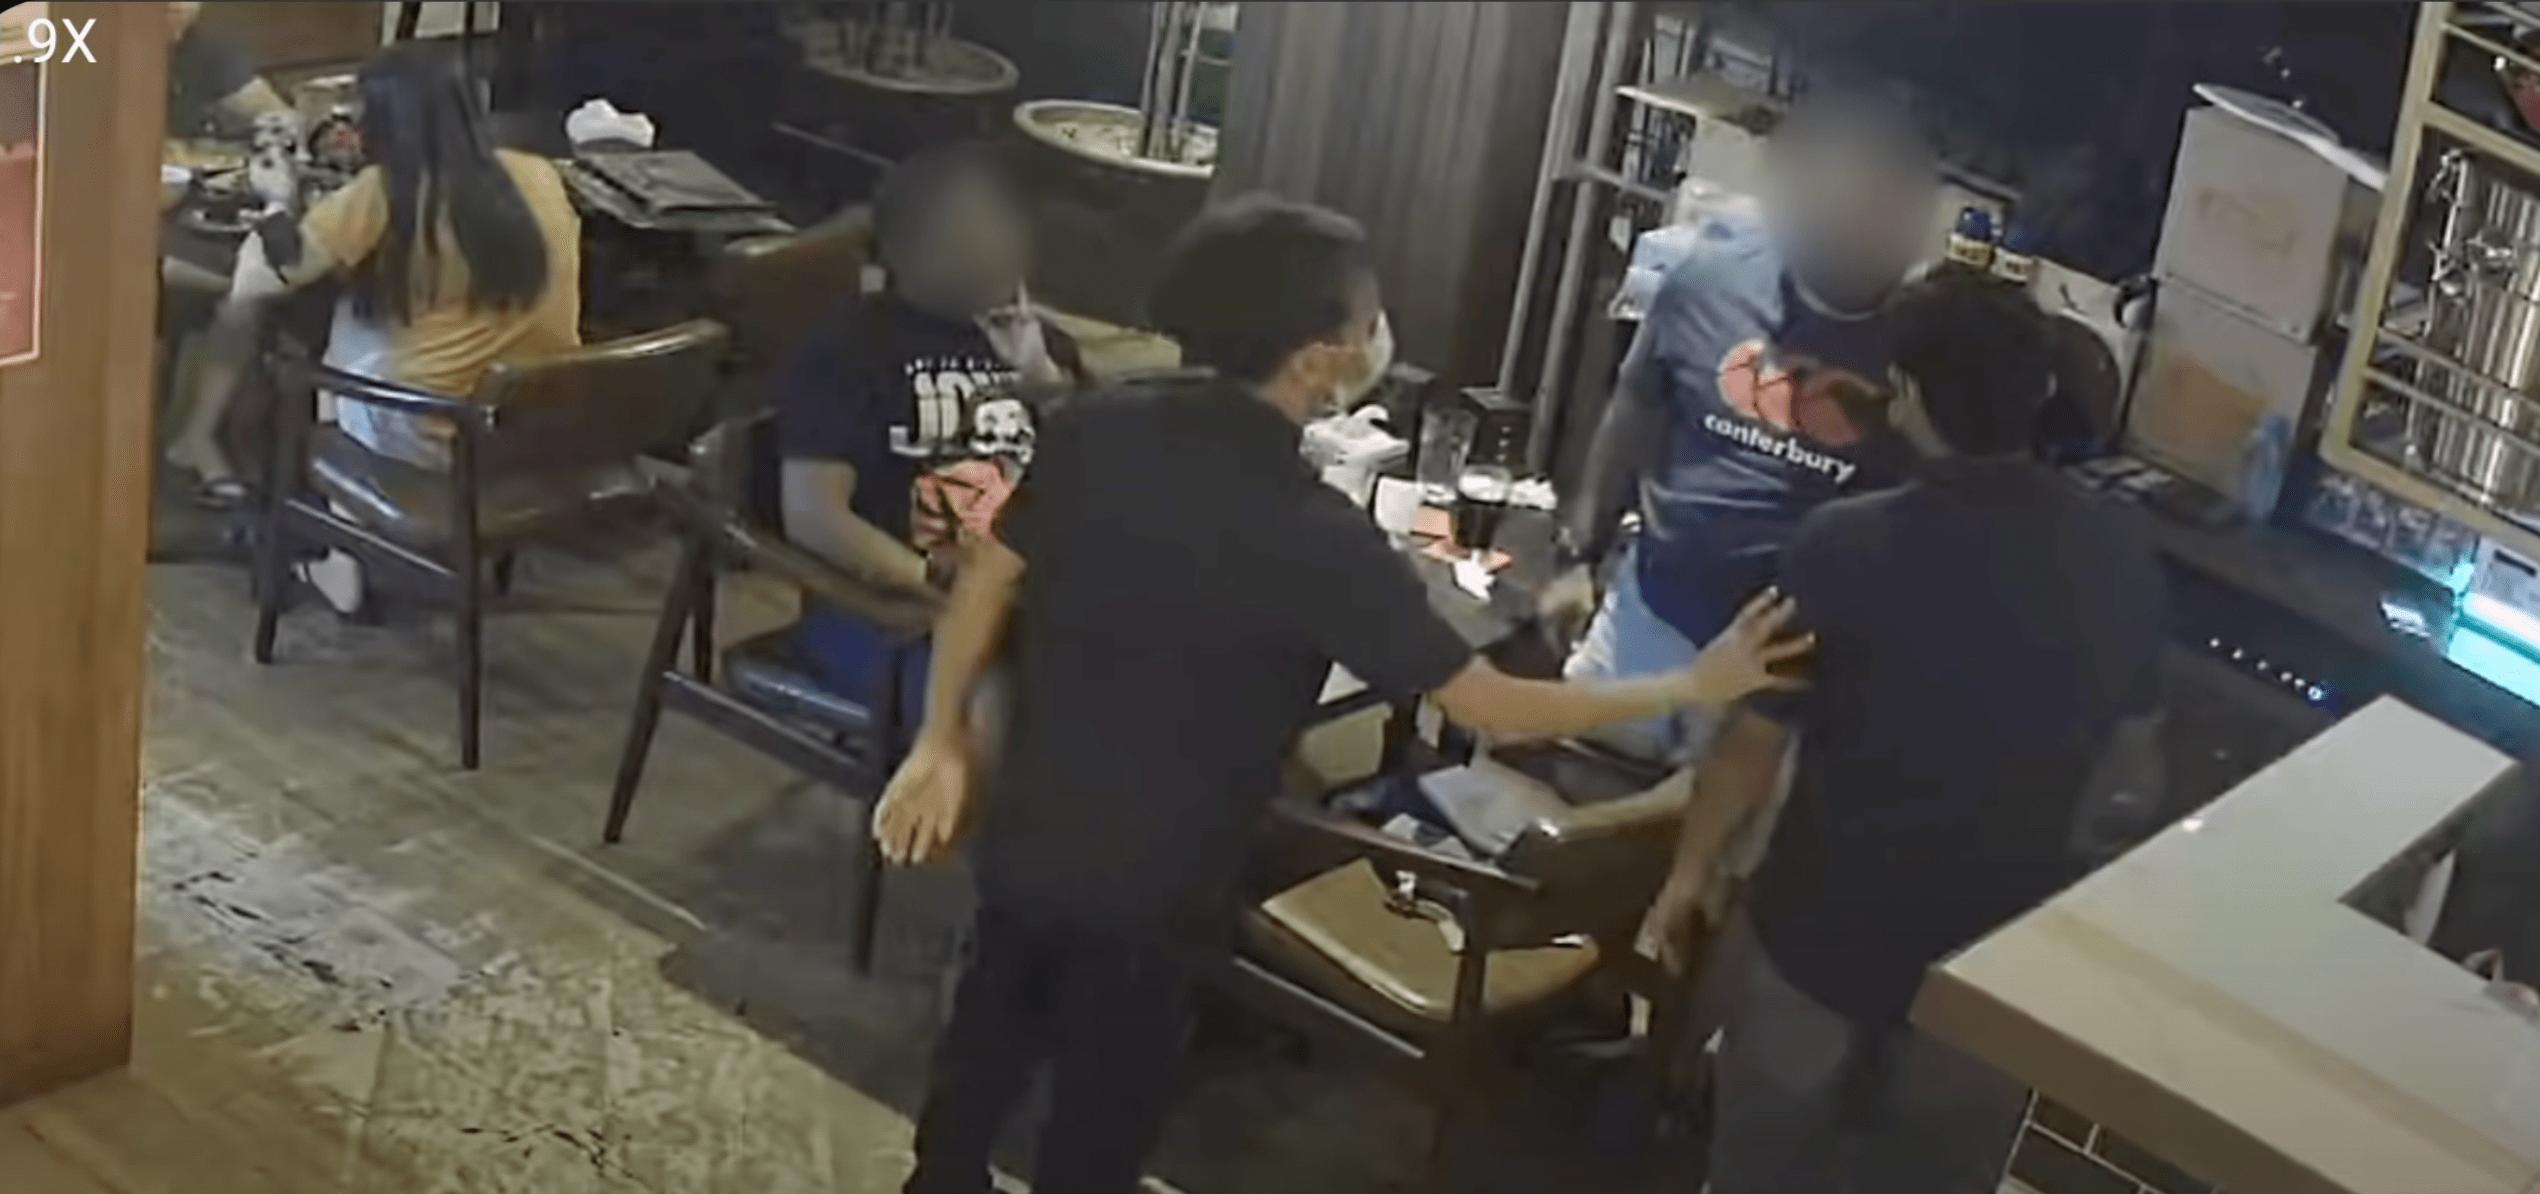 Customer slaps waiter for refusing to play tamil songs at a restaurant in subang jaya 03